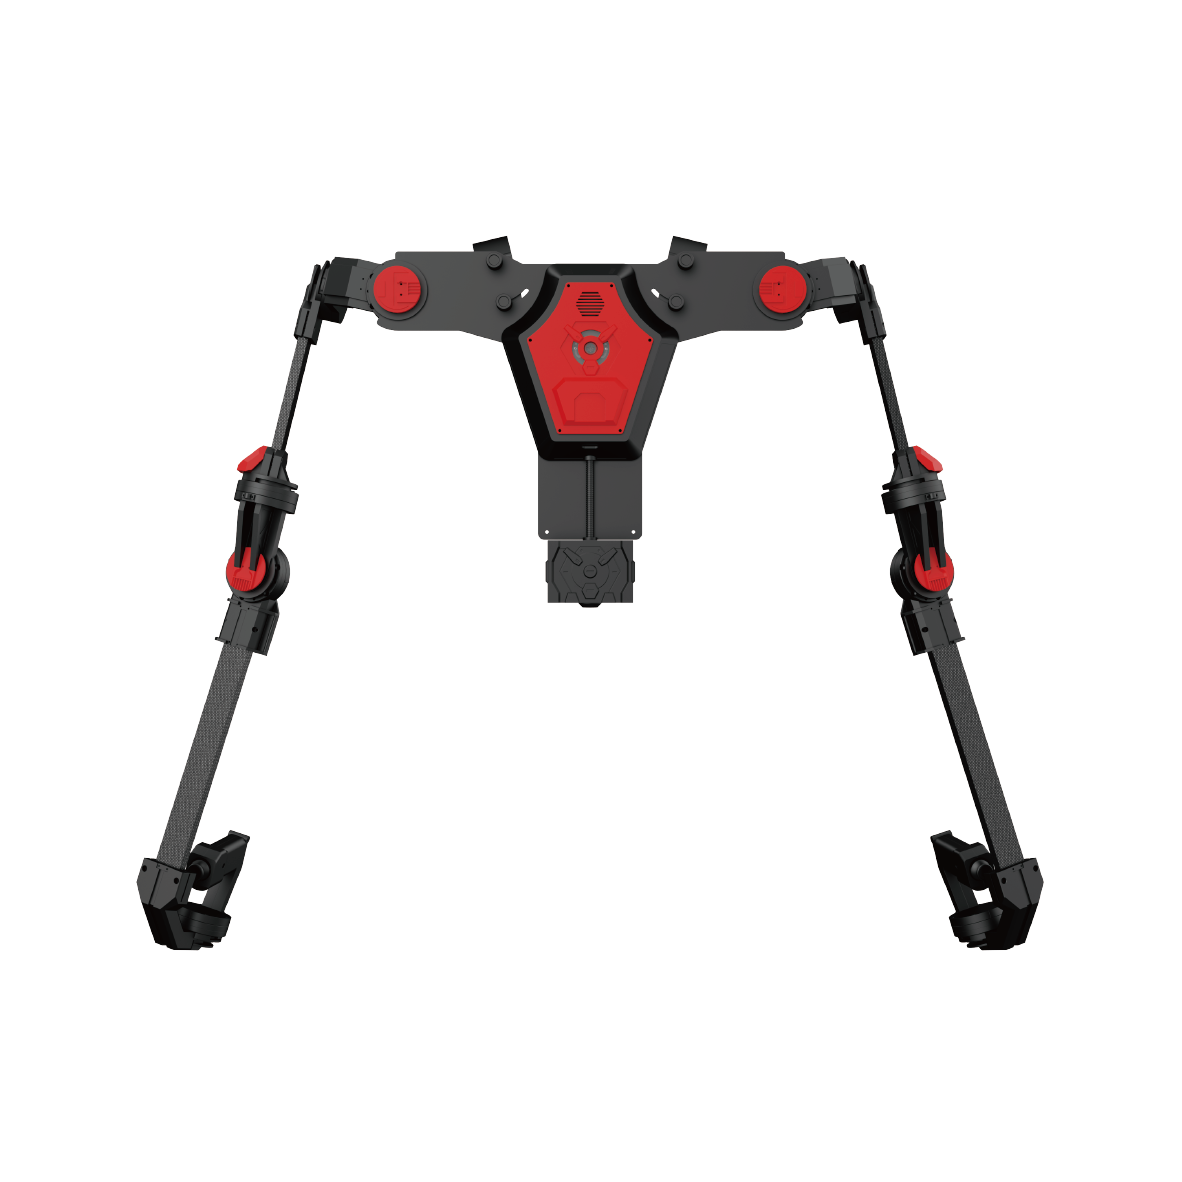 Exoskeleton controller